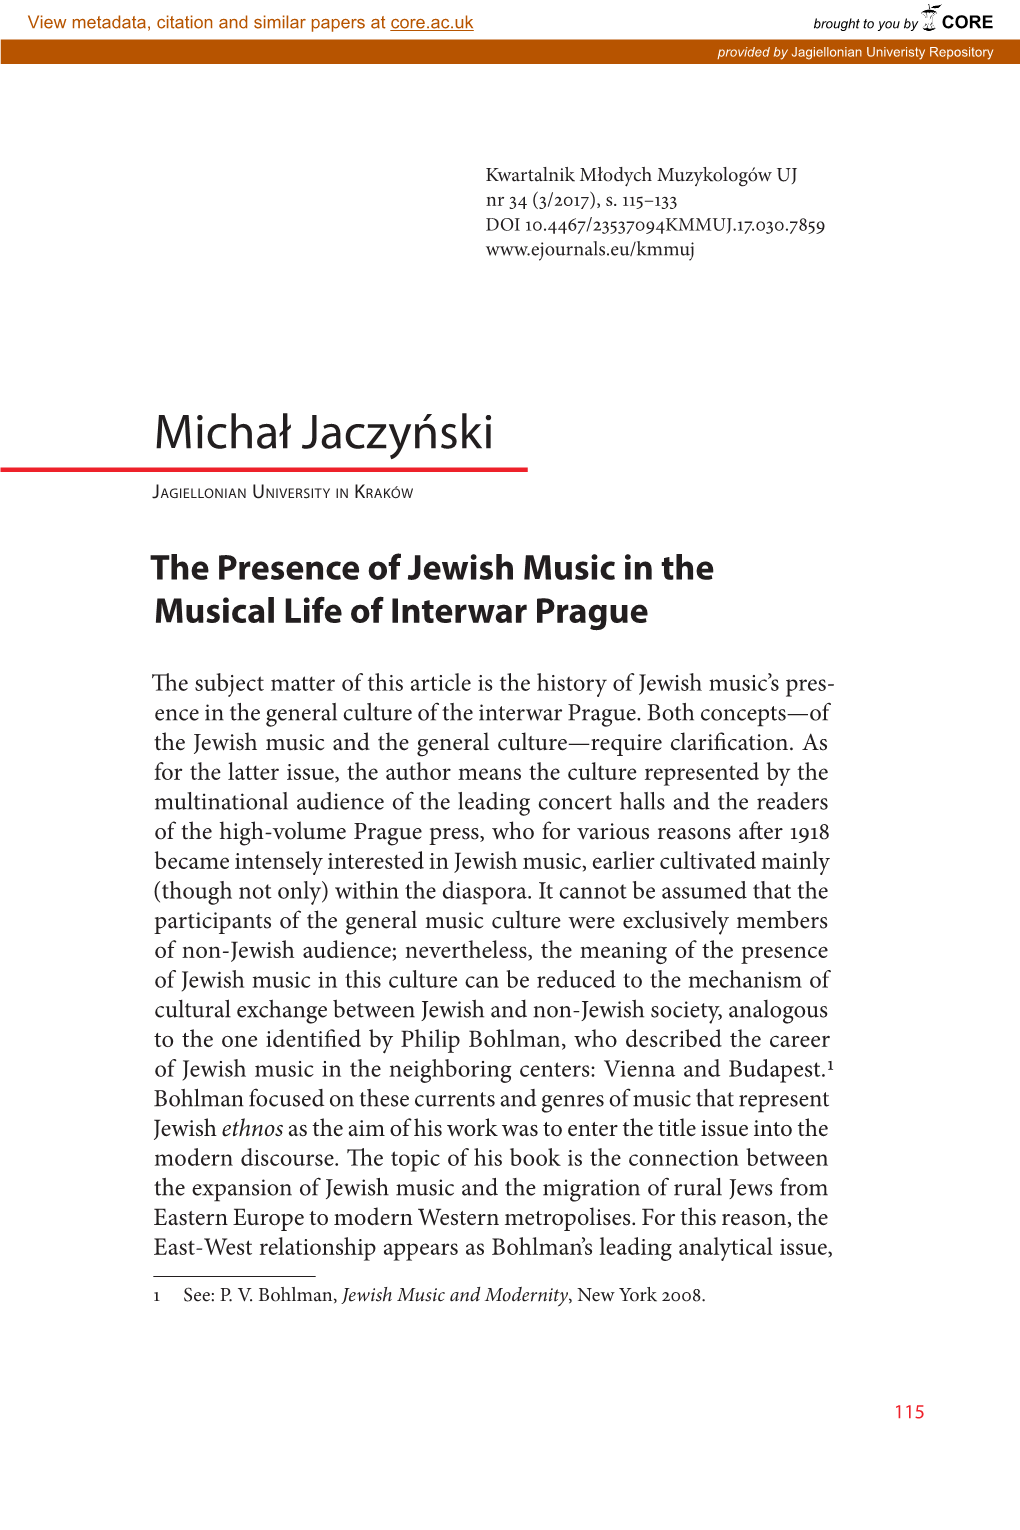 The Presence of Jewish Music in the Musical Life of Interwar Prague